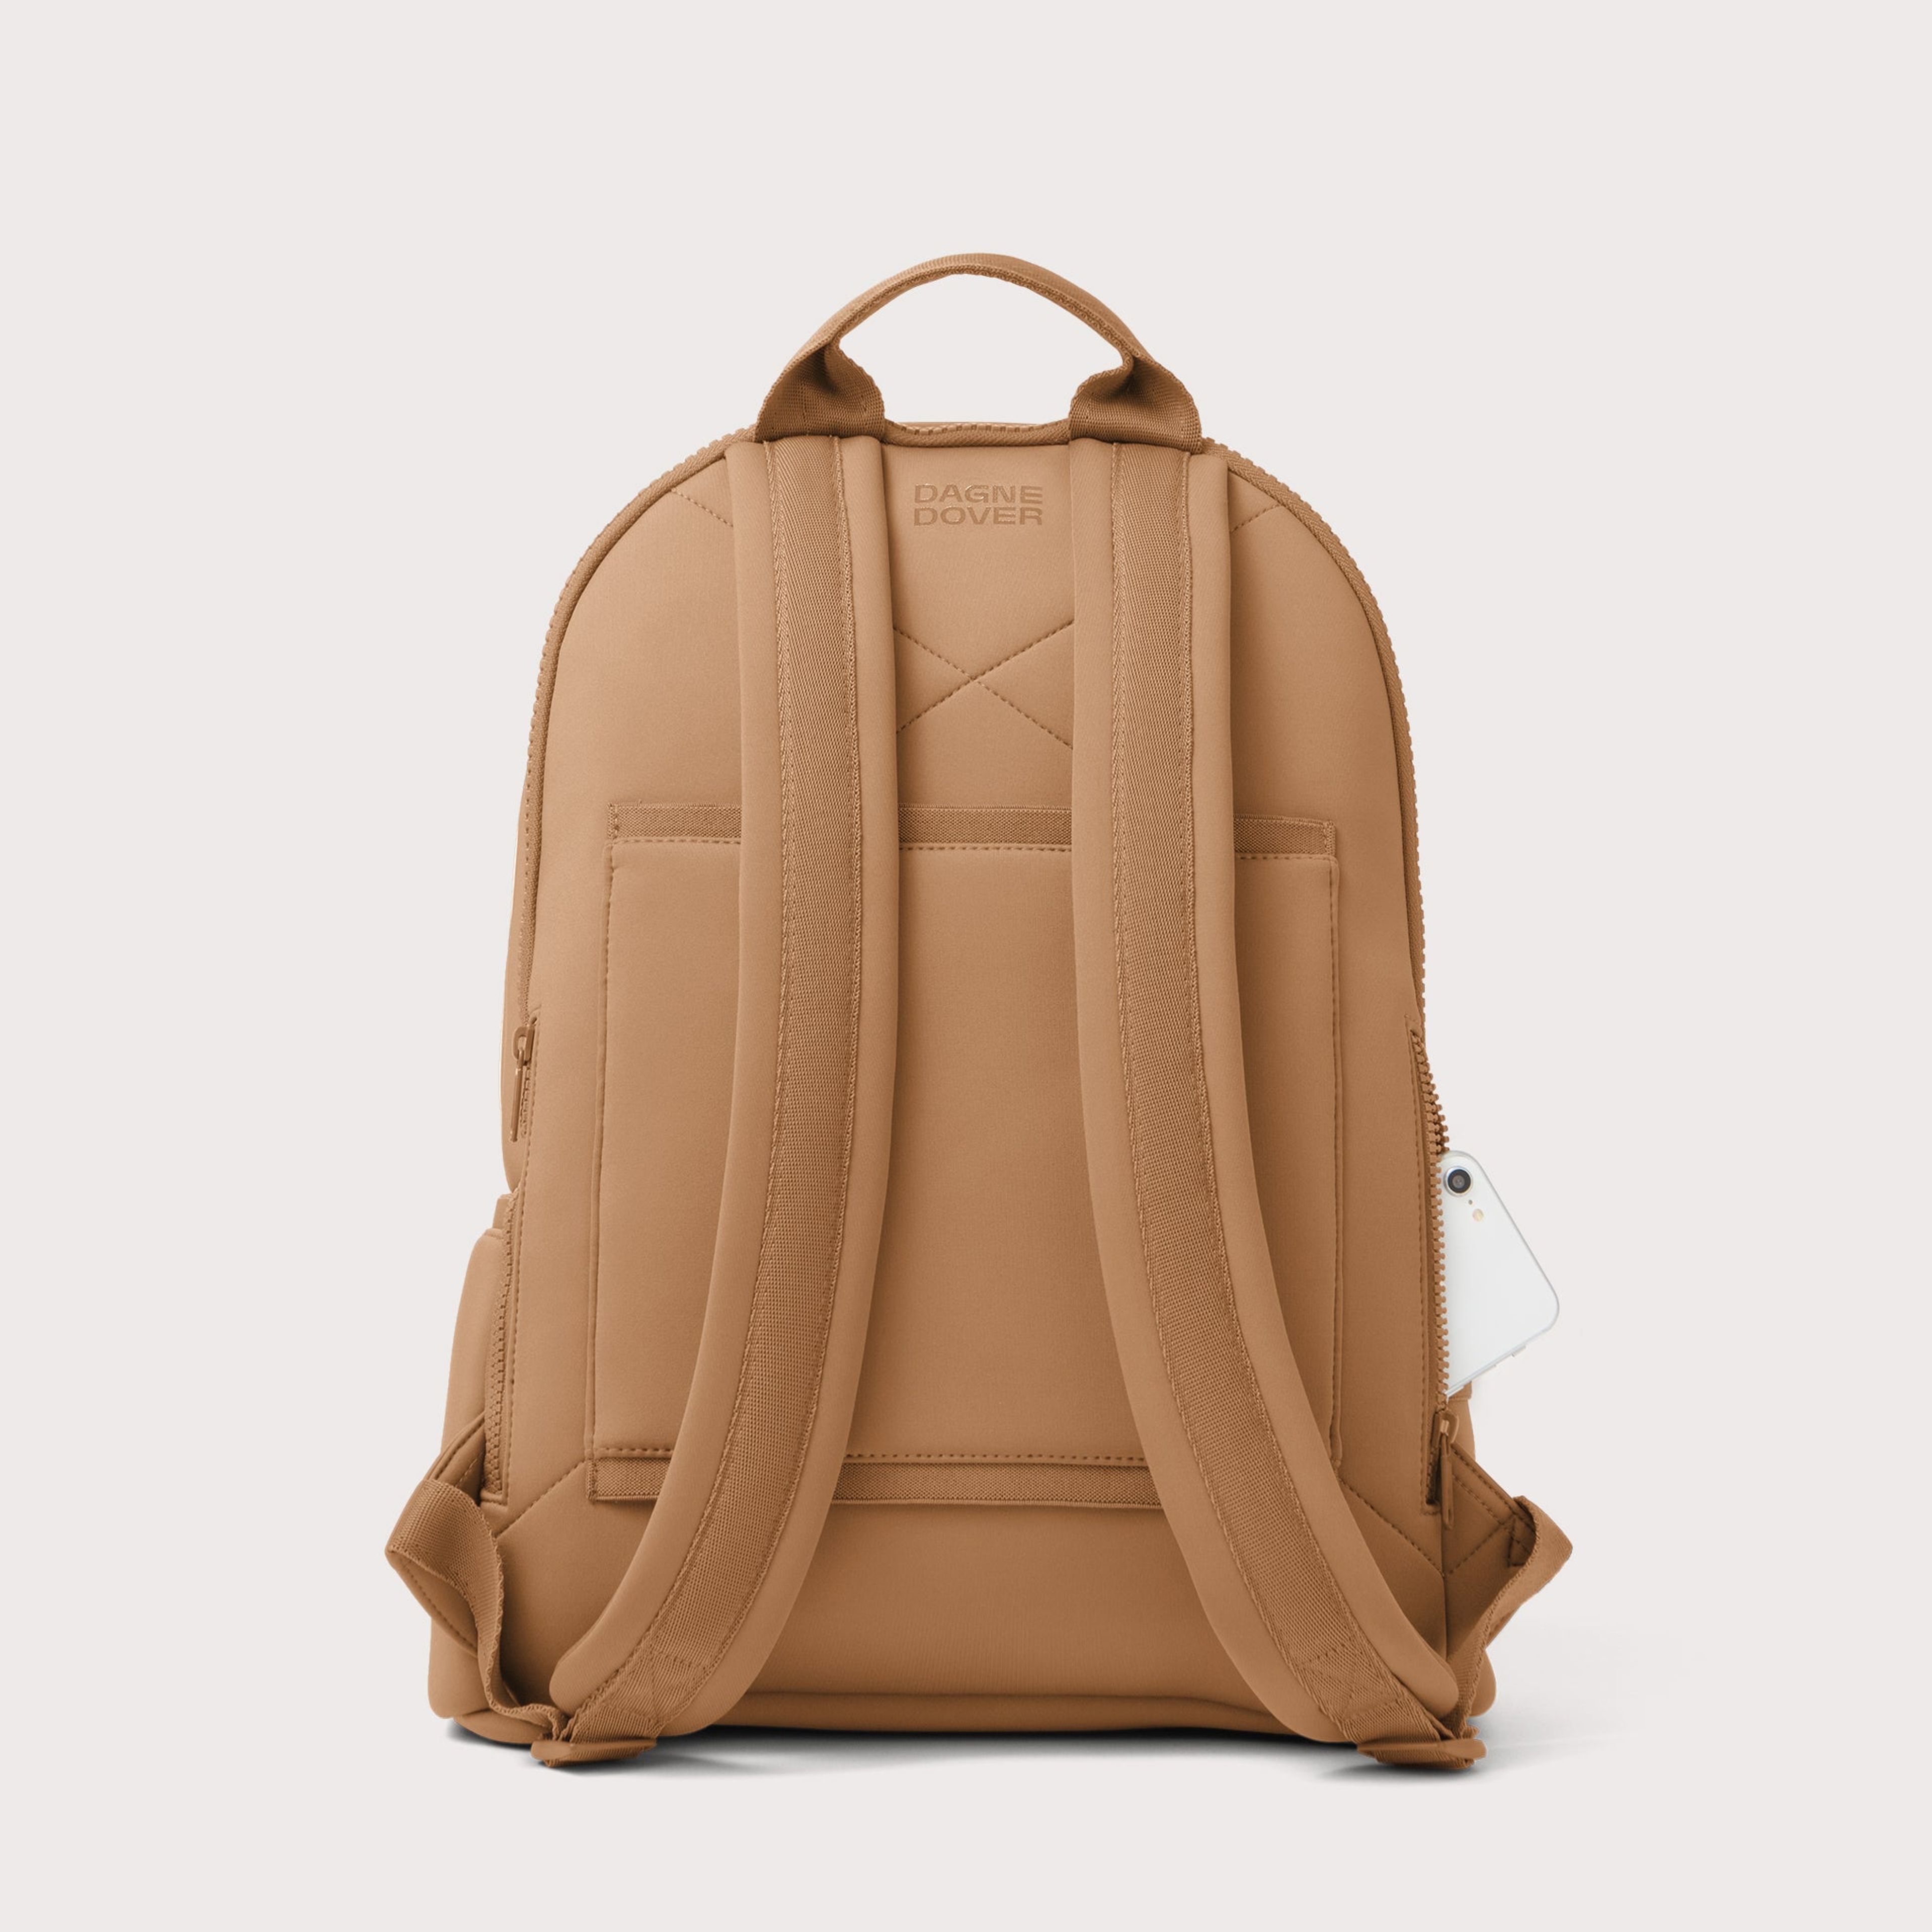 Dakota Backpack in Camel, Large